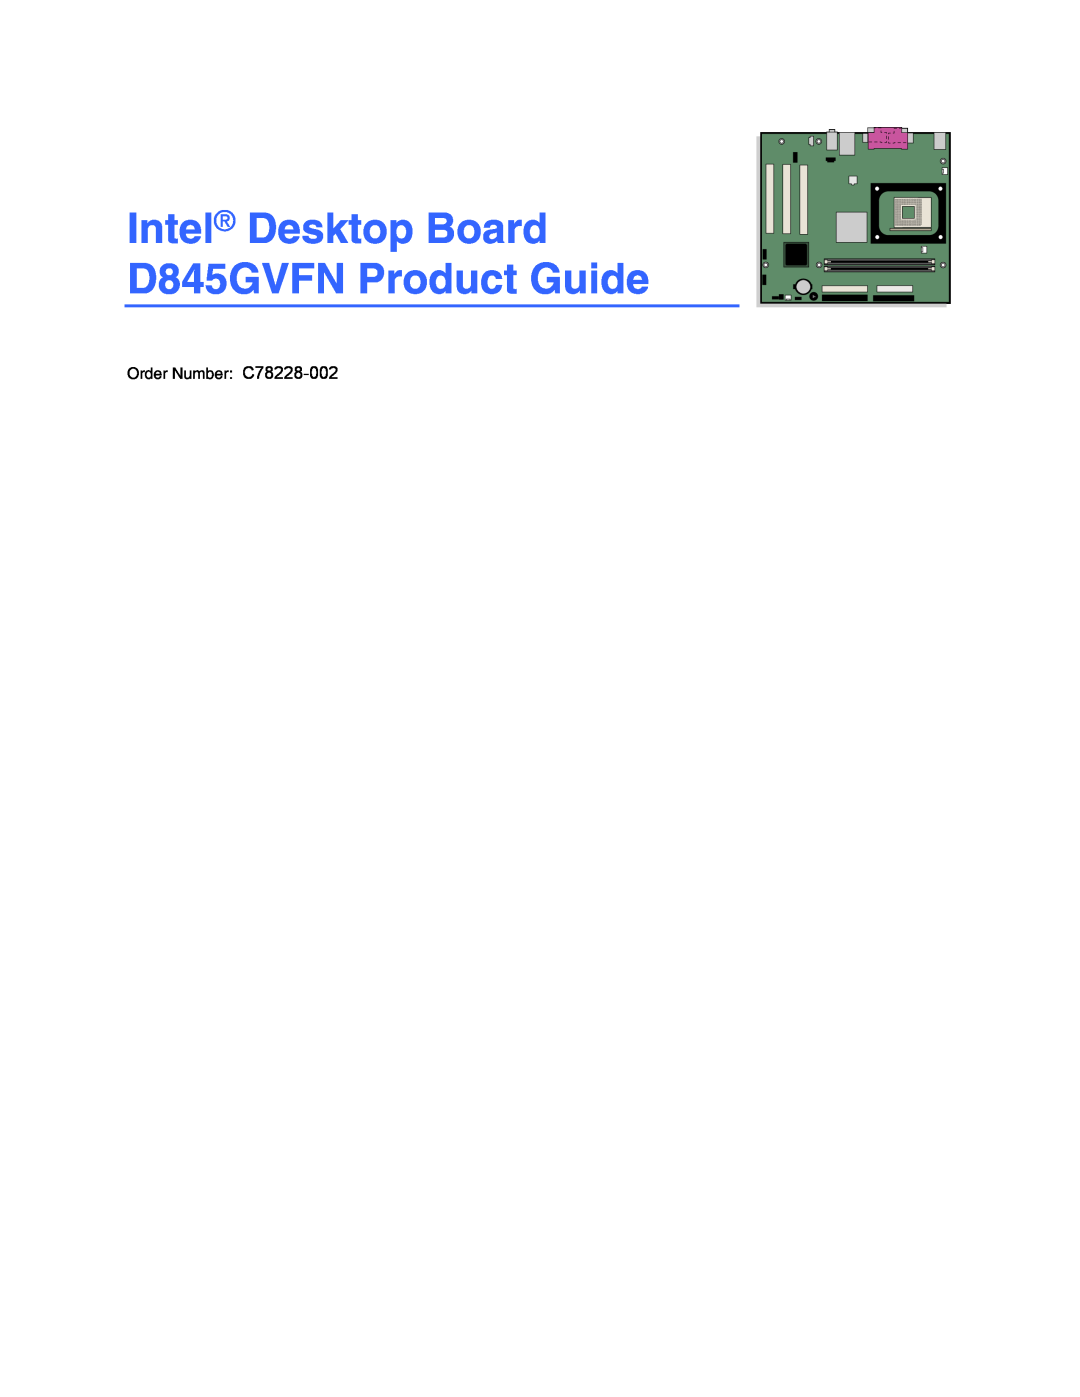 Intel manual Intel Desktop Board D845GVFN Product Guide, Order Number C78228-002 